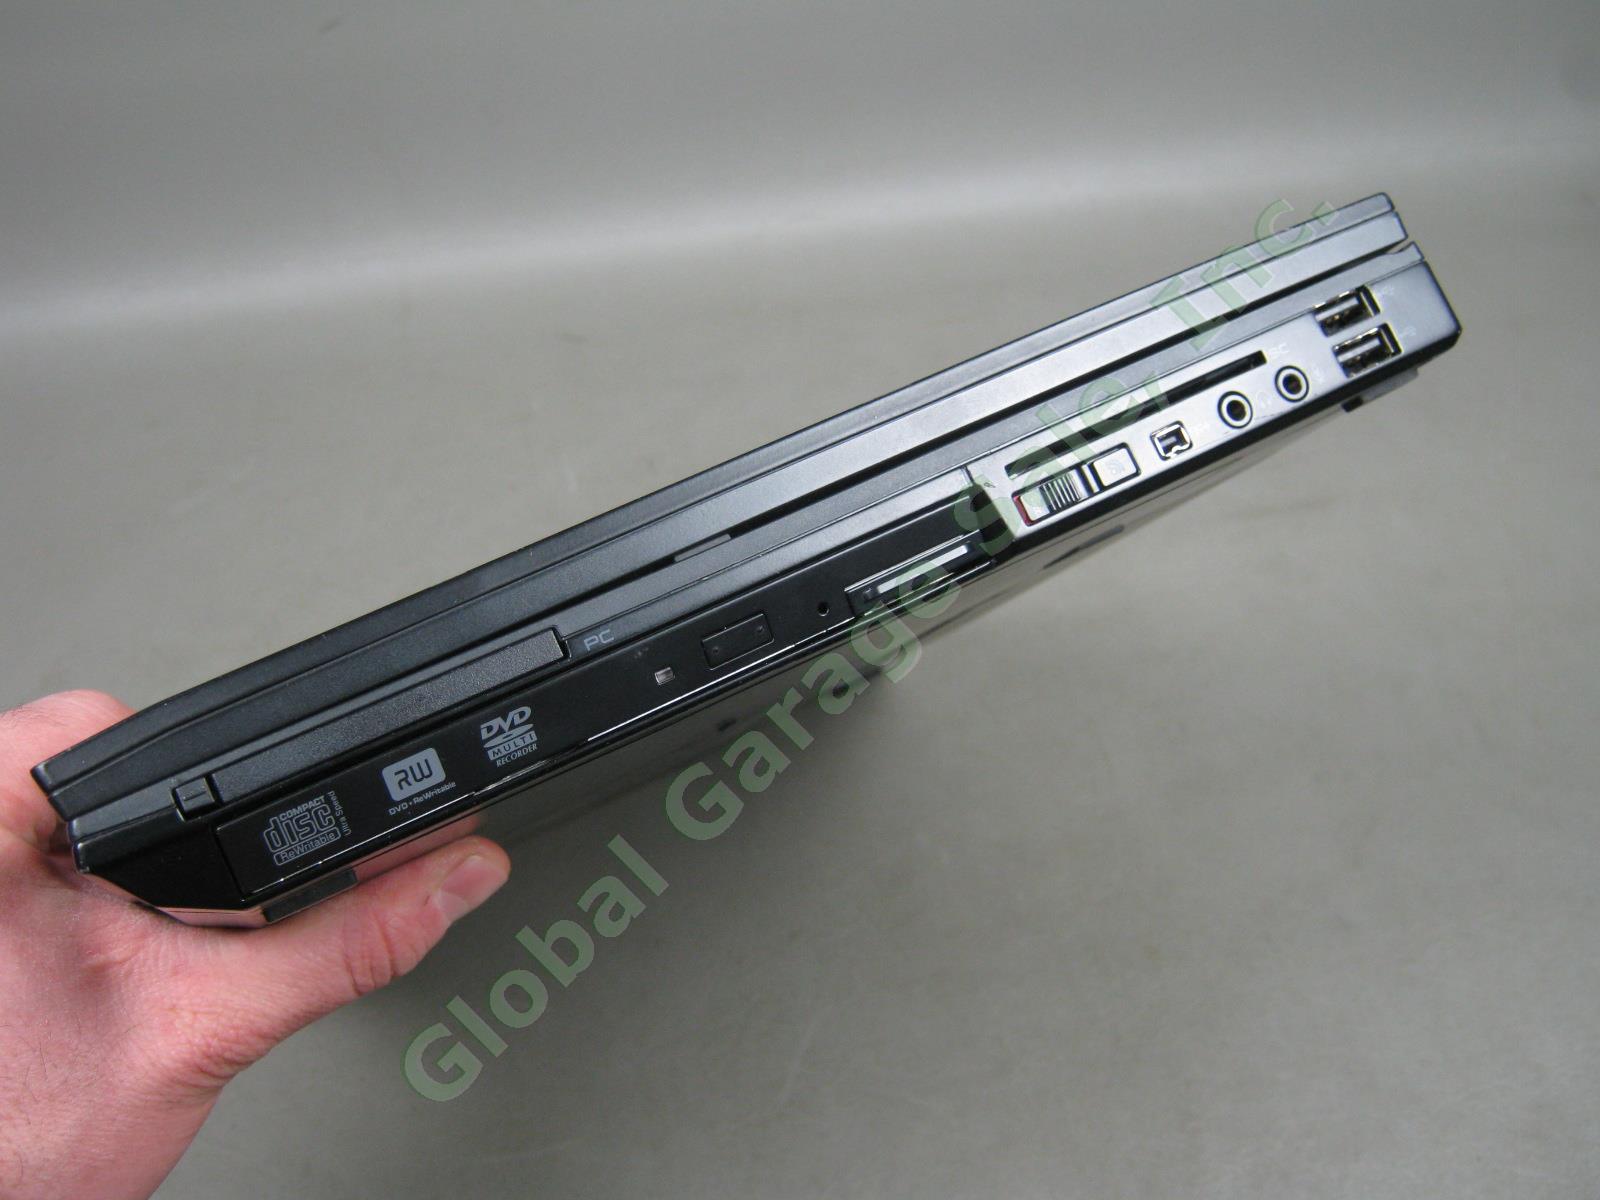 Dell Latitude E6500 Laptop 15.4" C2D 2.53GHz 2GB RAM 160GB HDD Window 7 Ultimate 5